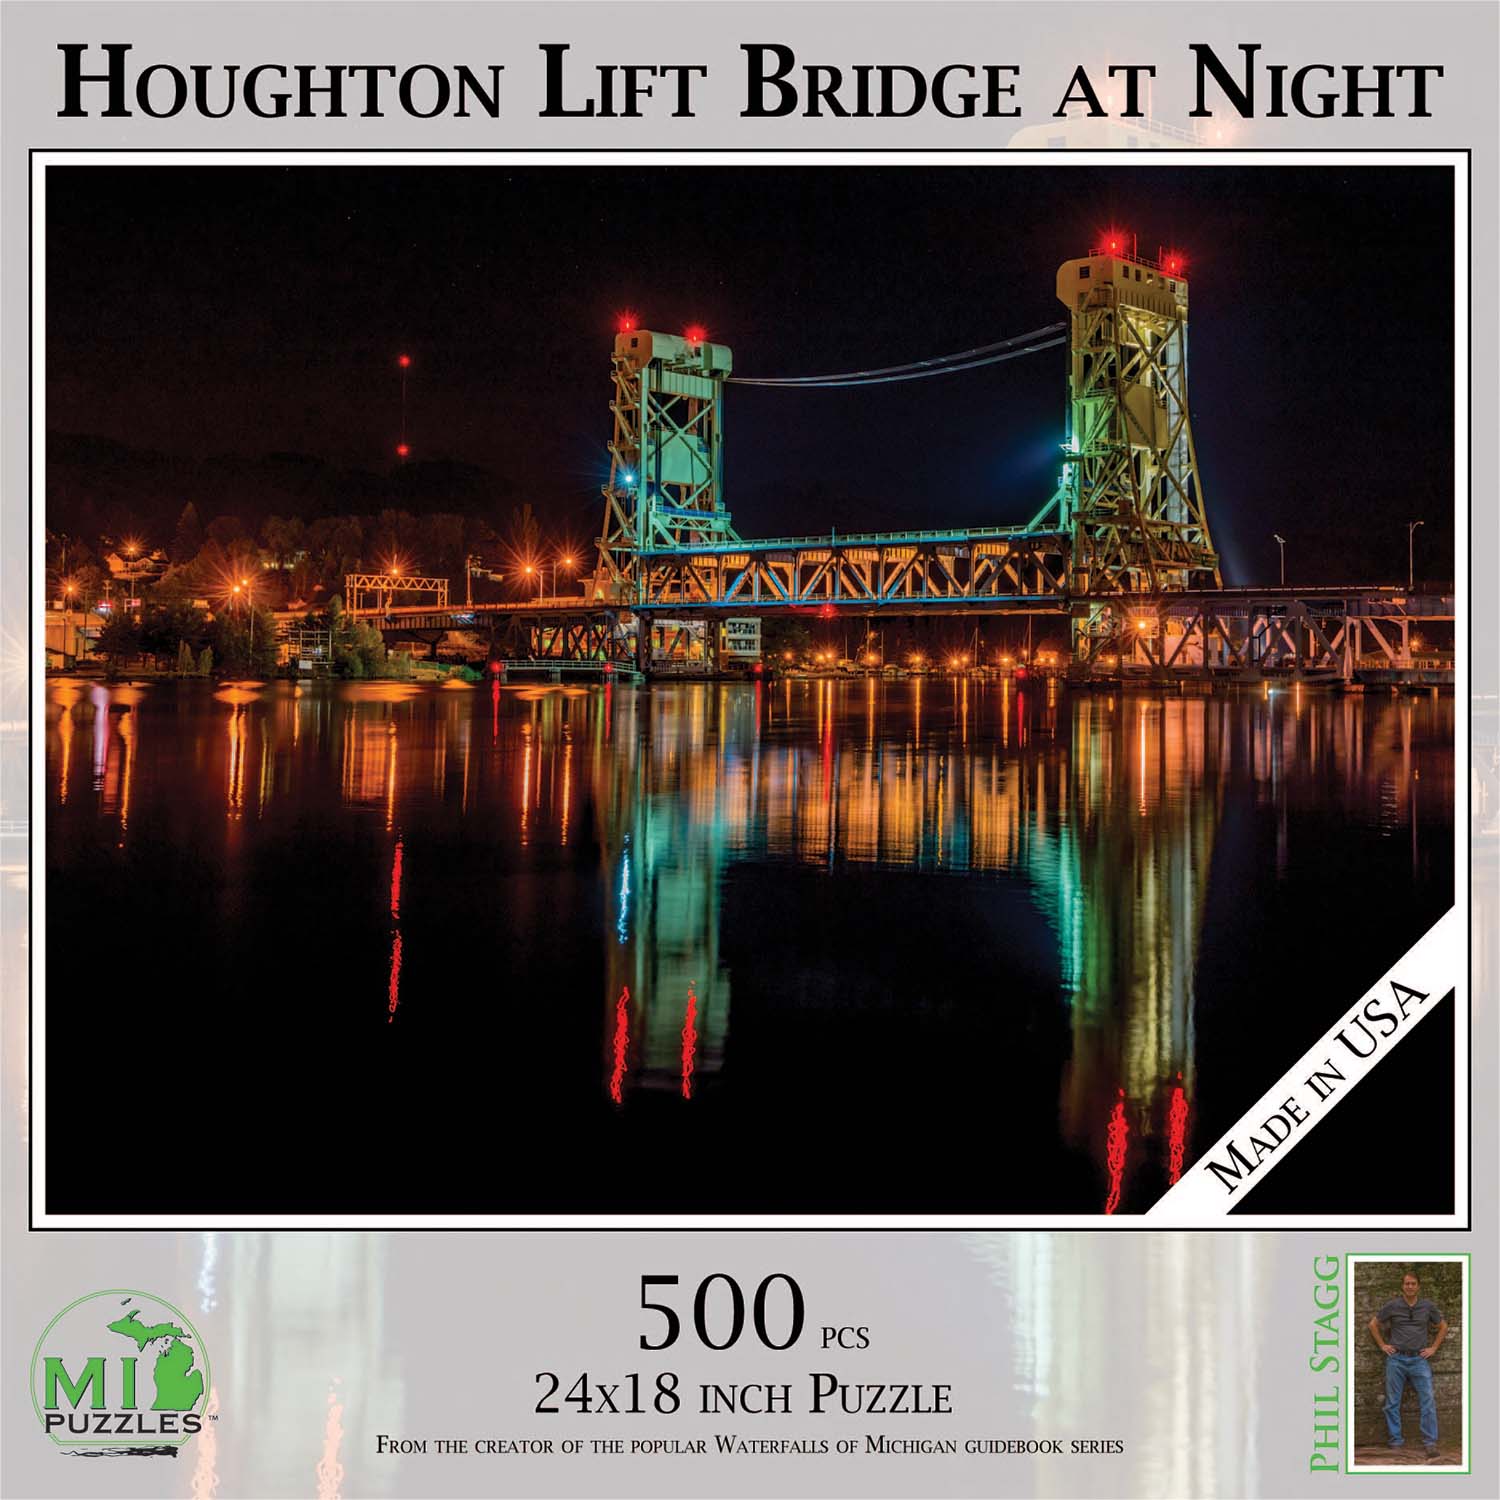 Houghton Lift Bridge at Night